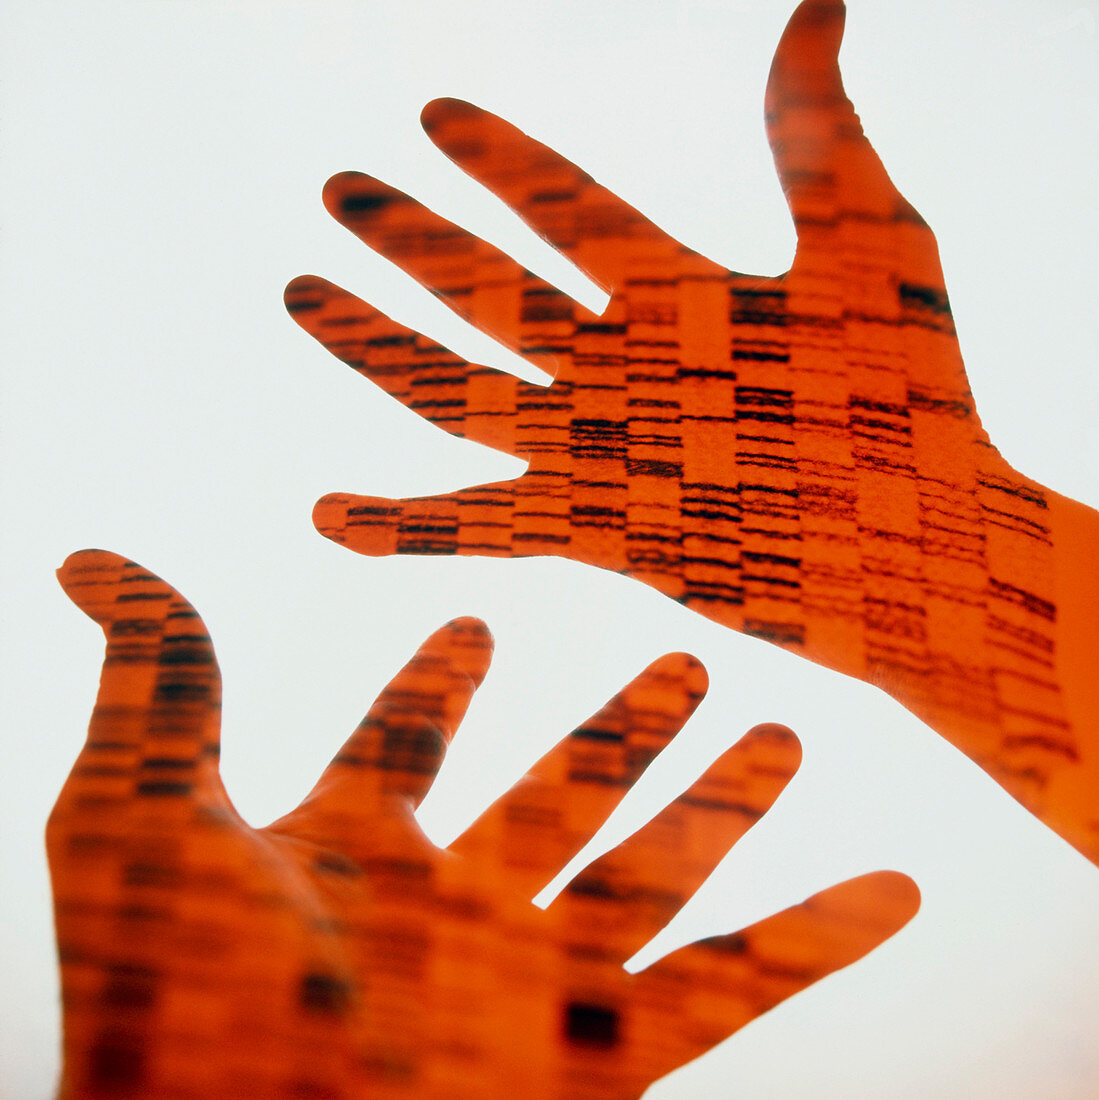 Radiogram of DNA on hands